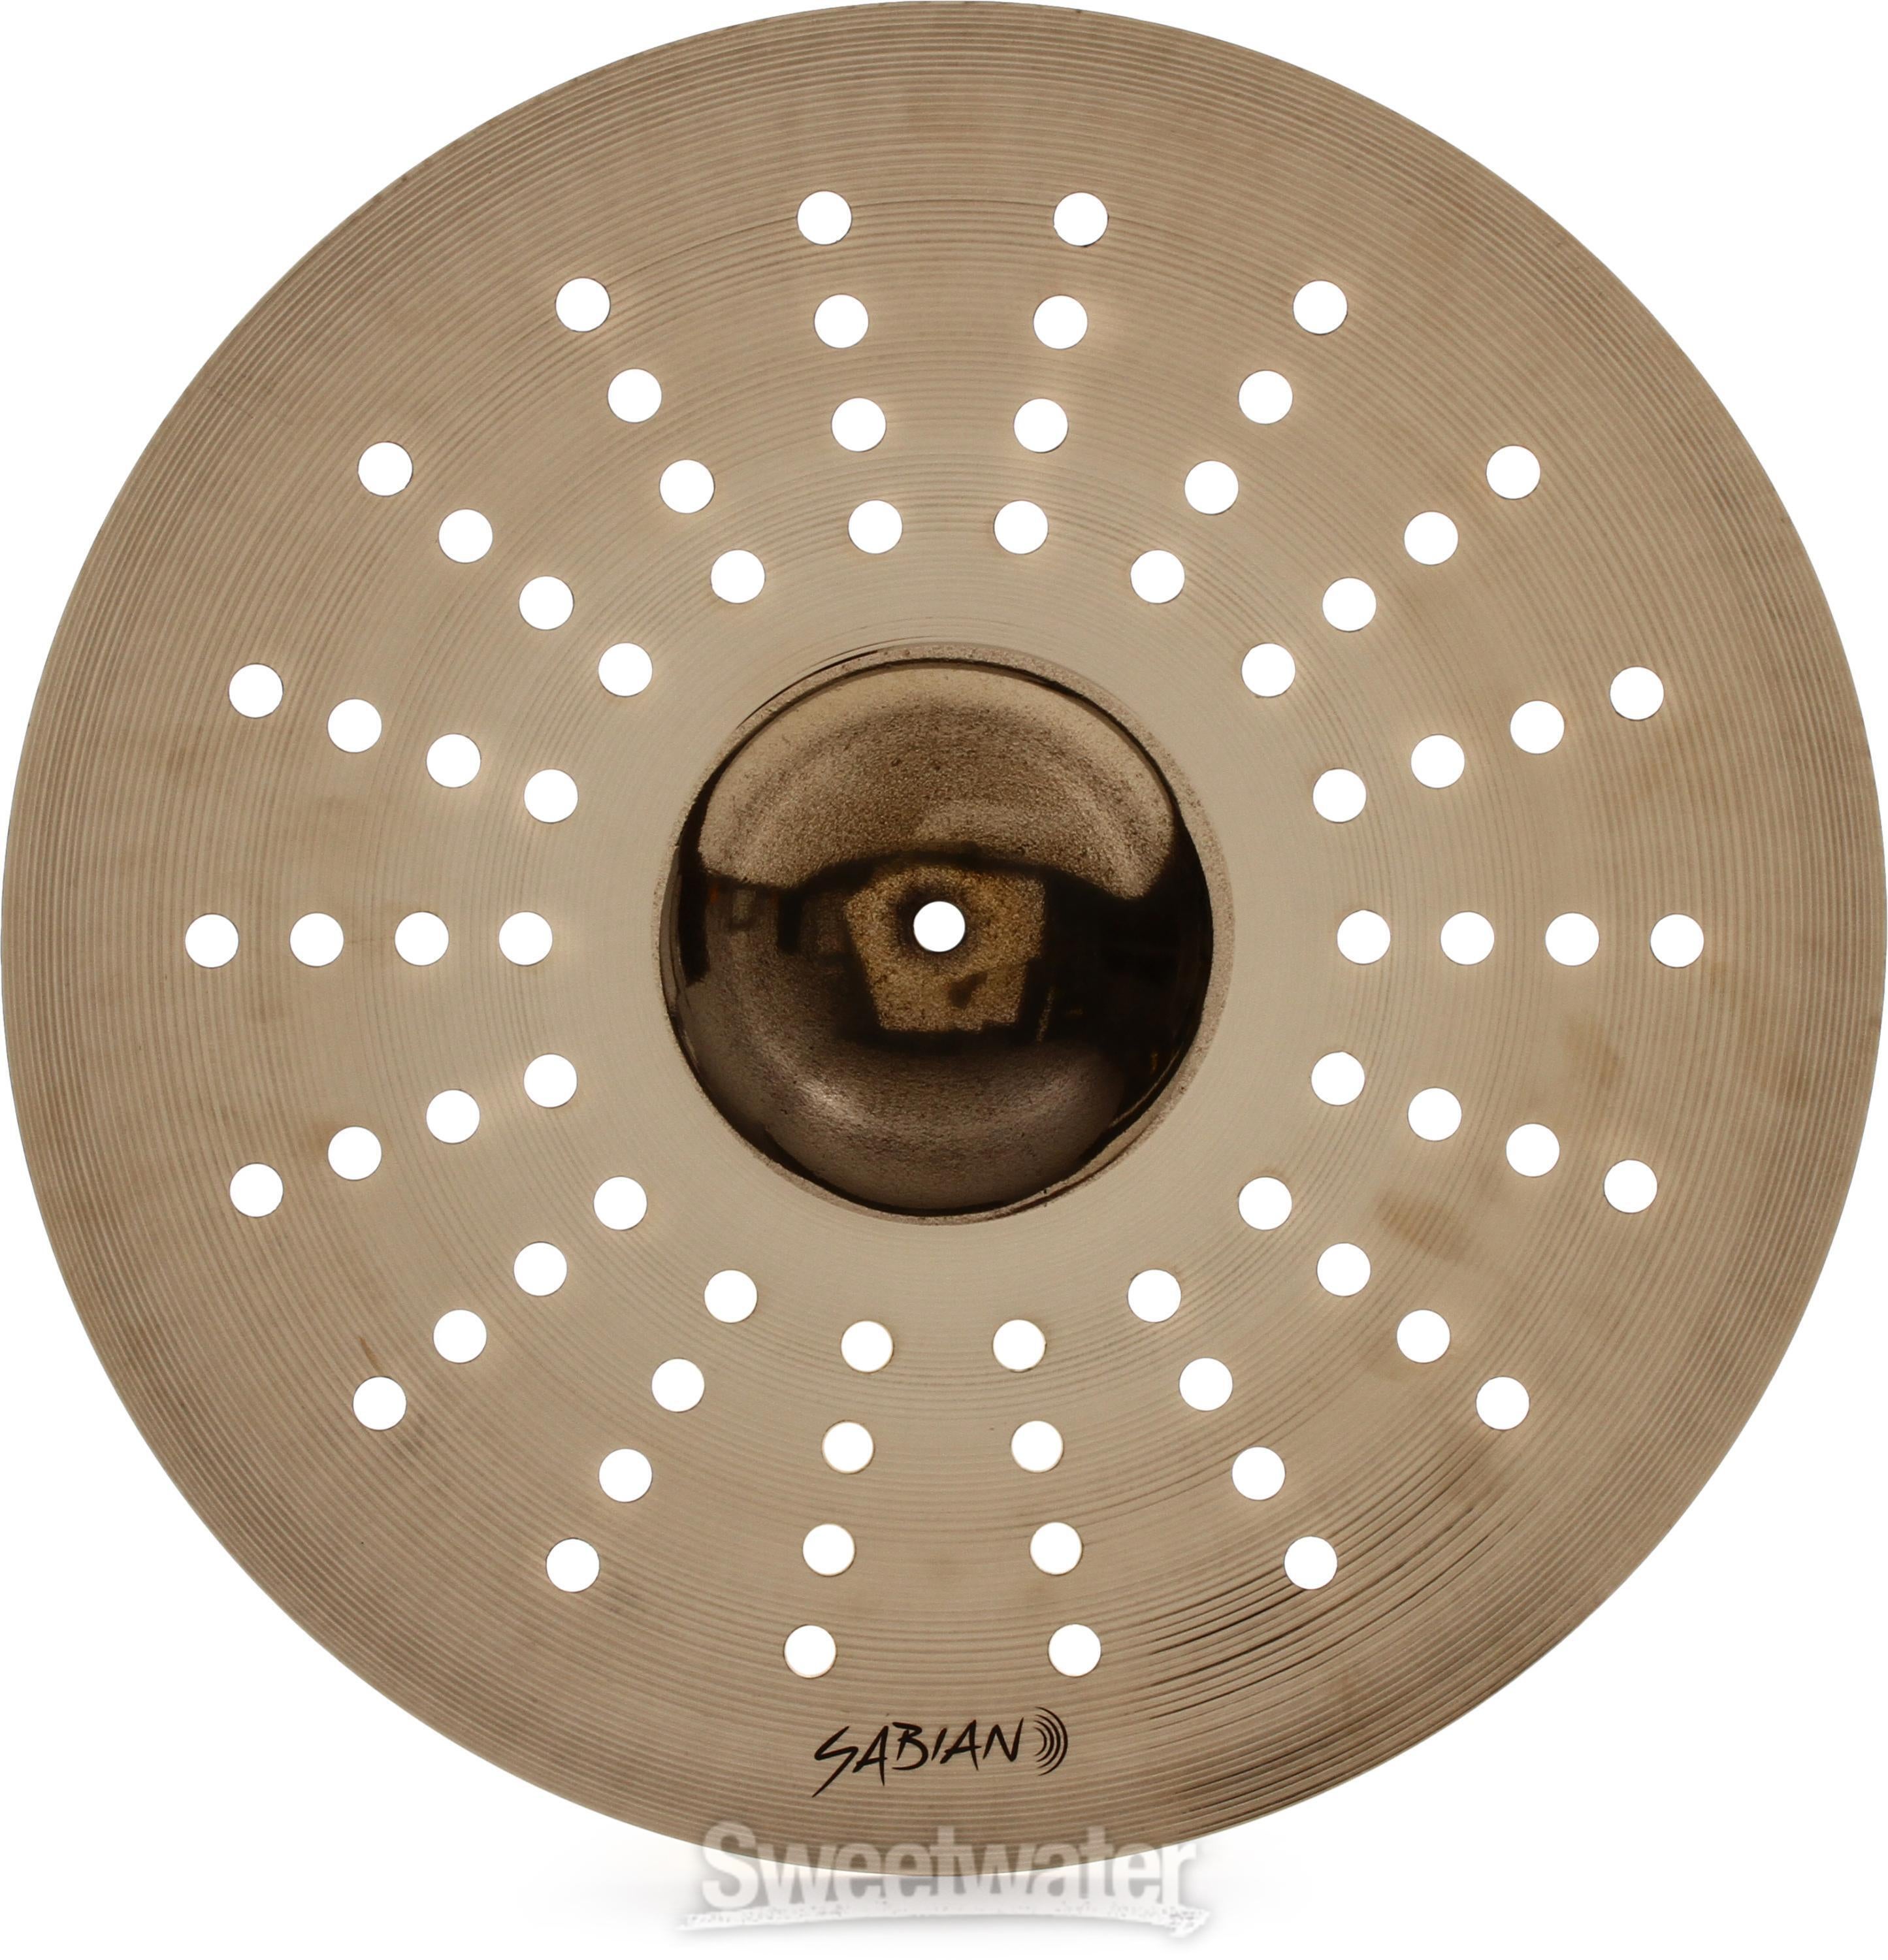 Sabian 18 inch AAX Aero Crash Cymbal - Brilliant Finish | Sweetwater